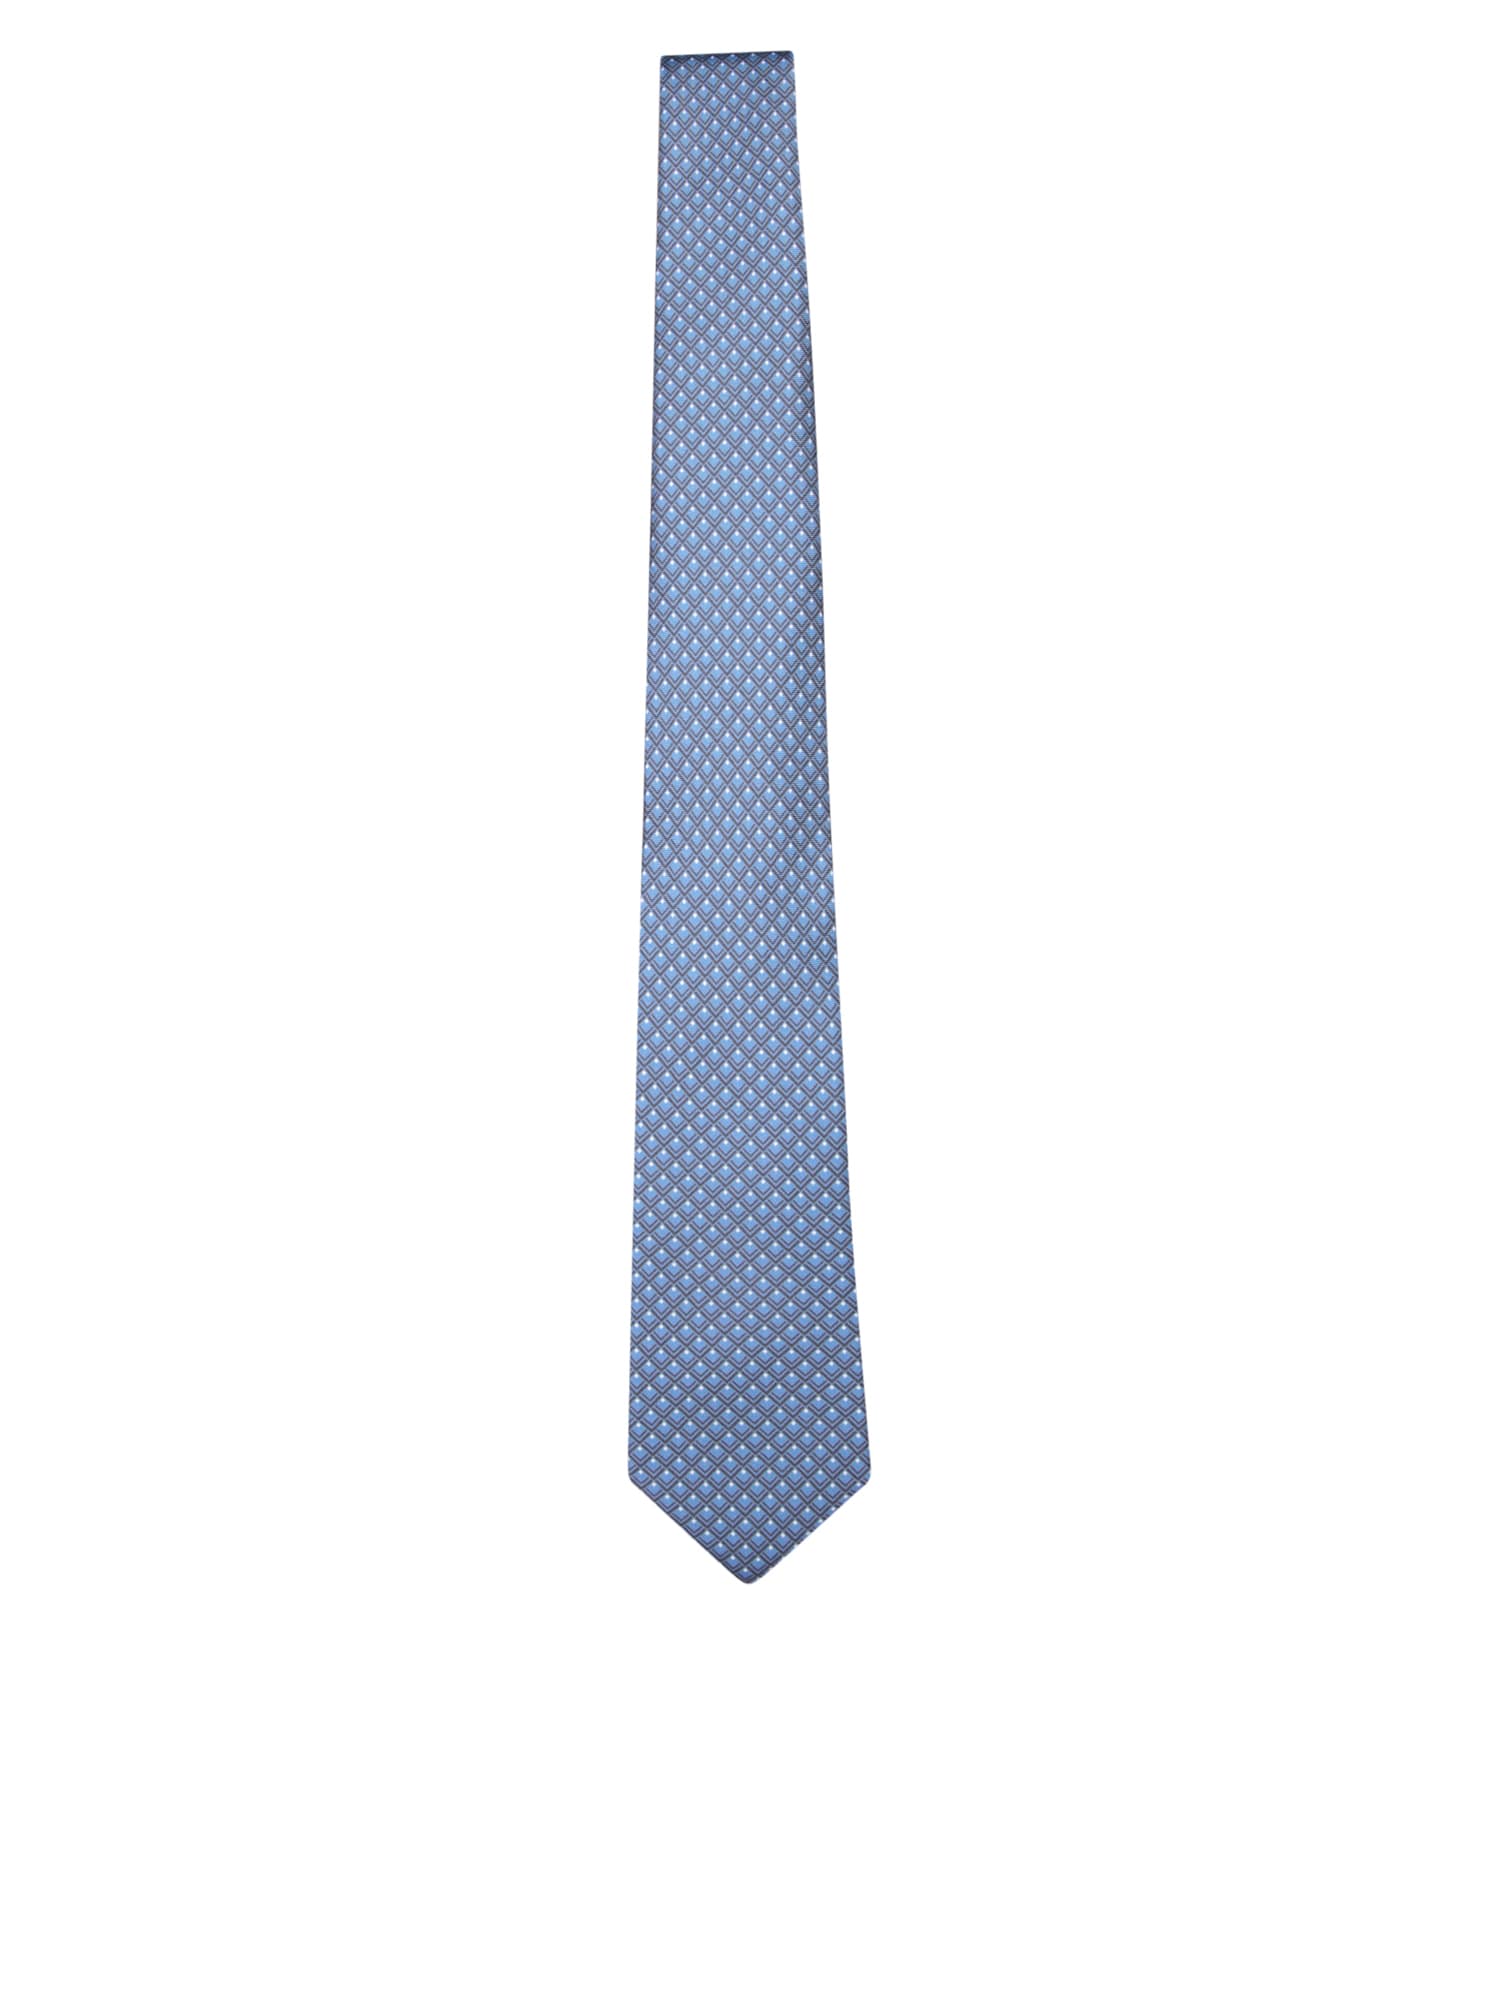 Geometric Blue Tie